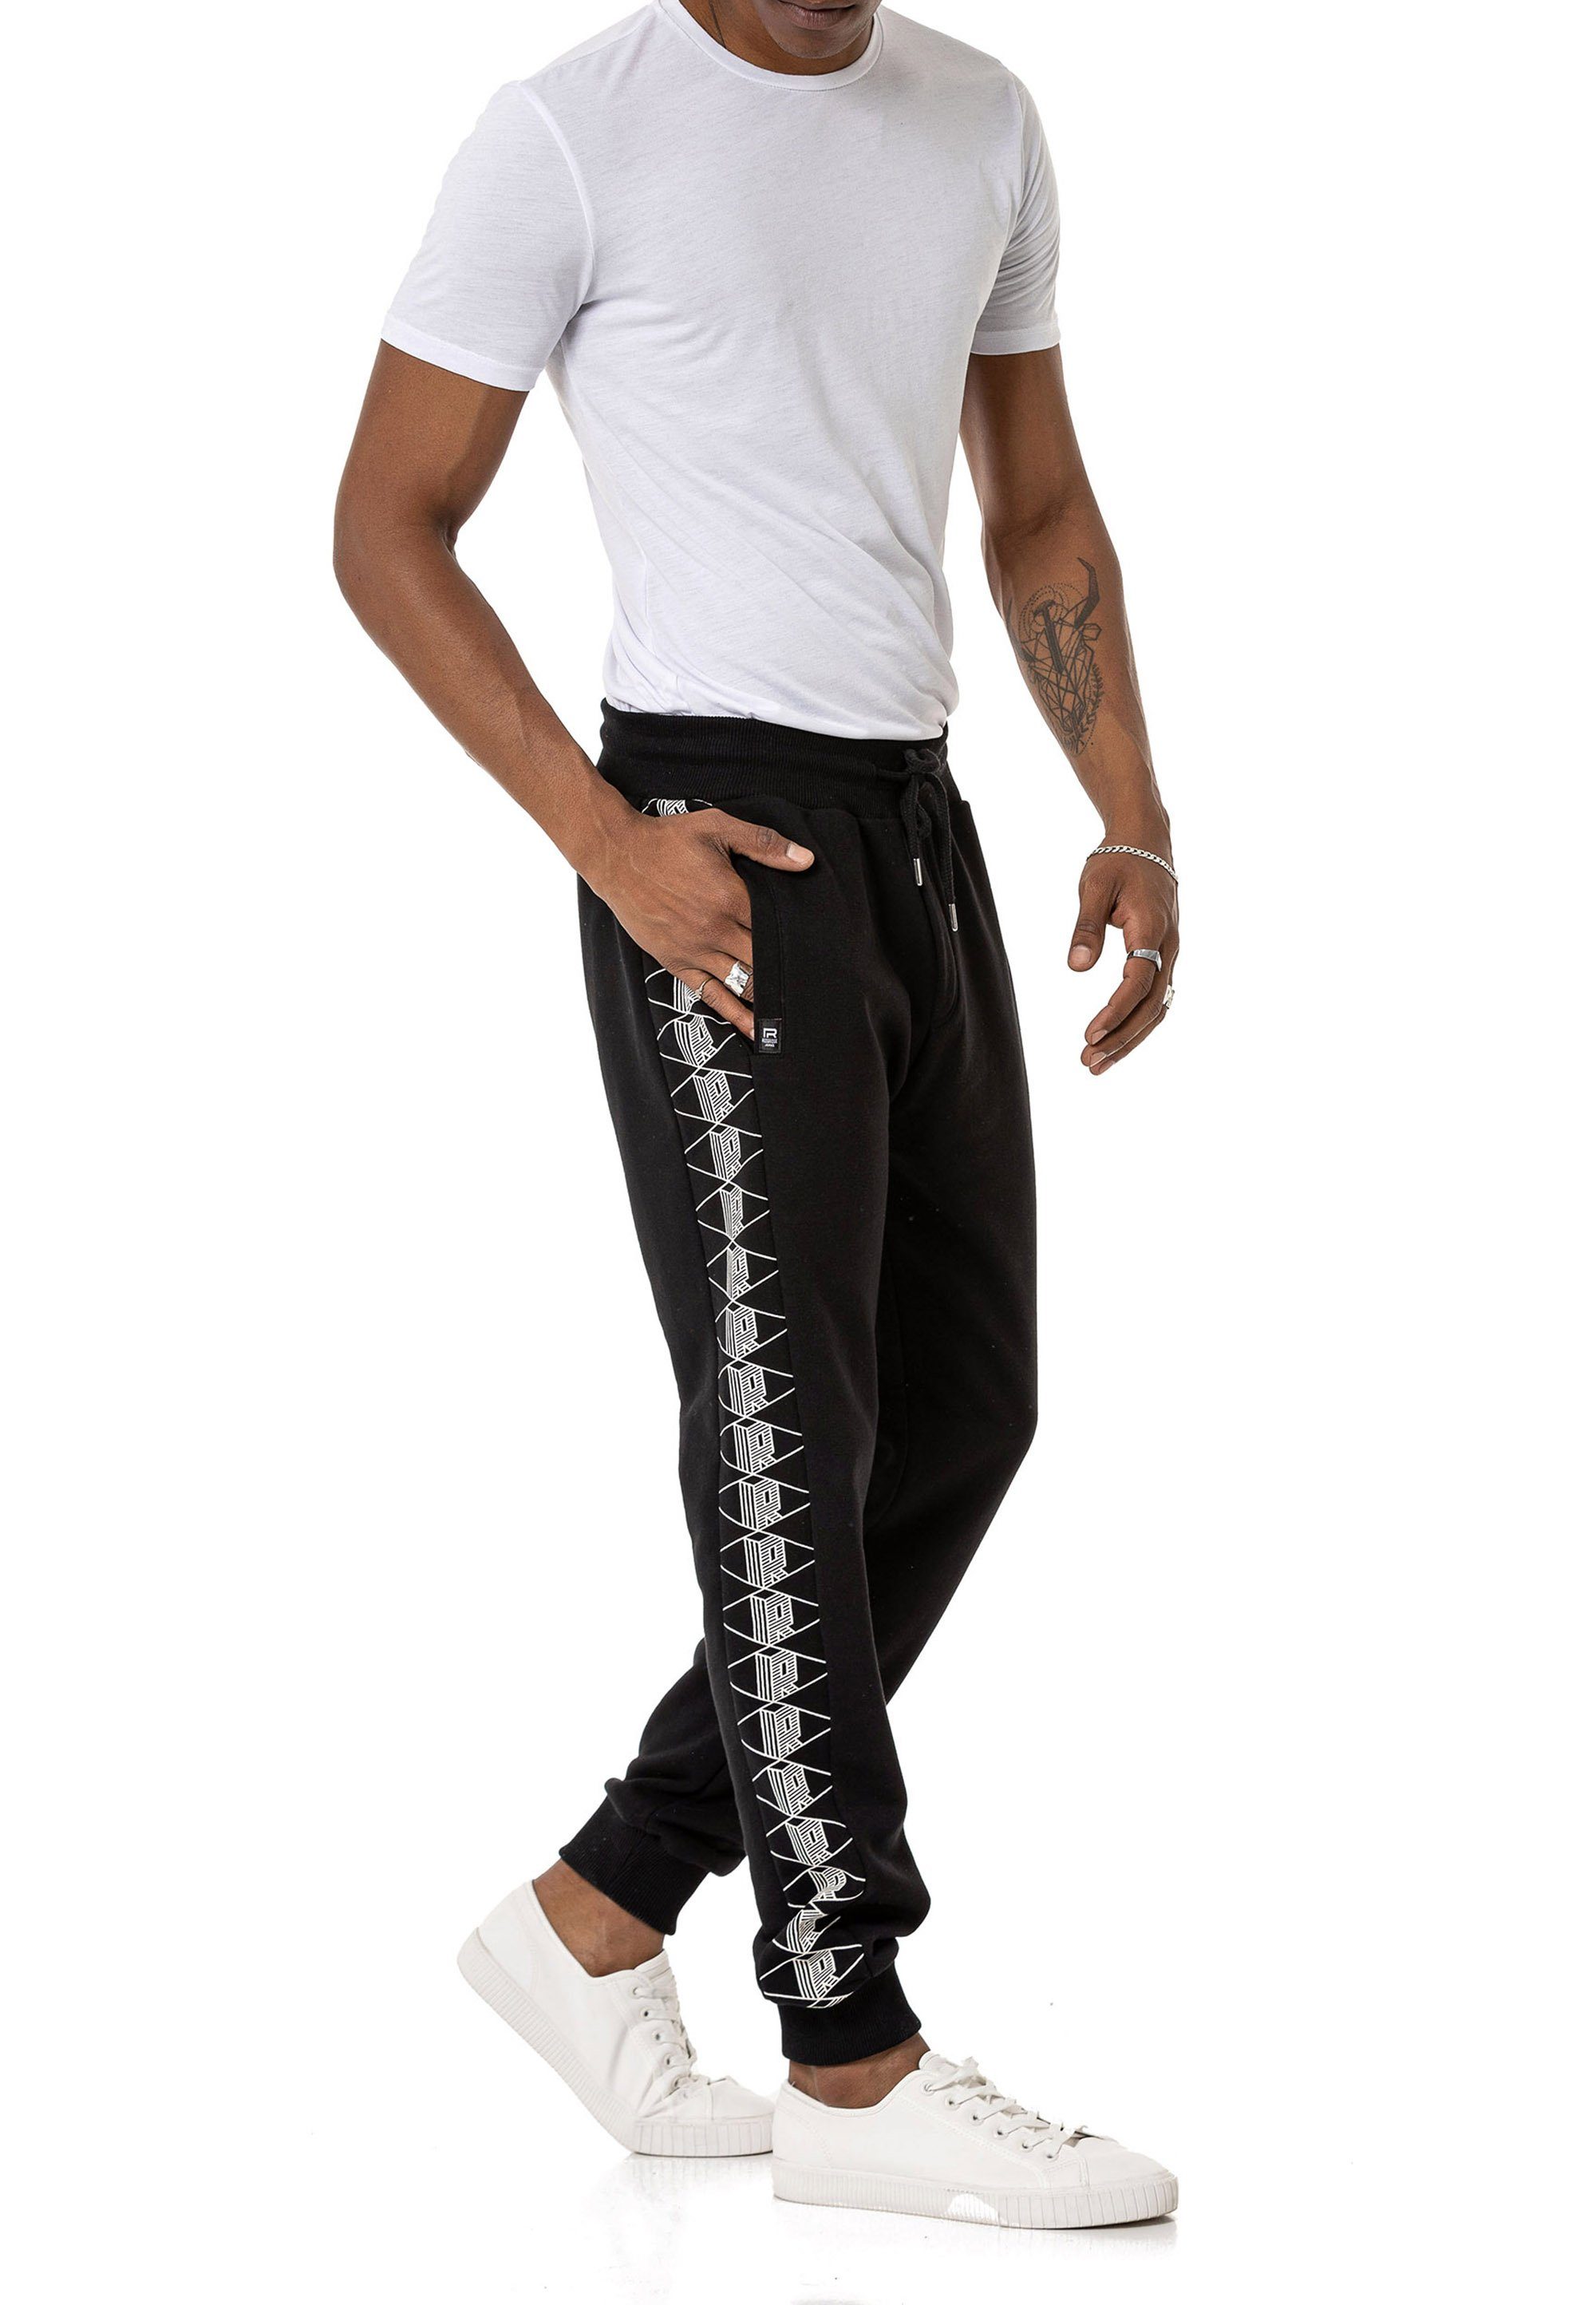 RedBridge Jogginghose Sweatpants Schwarz Print Qualität Premium mit 3D seitlichem